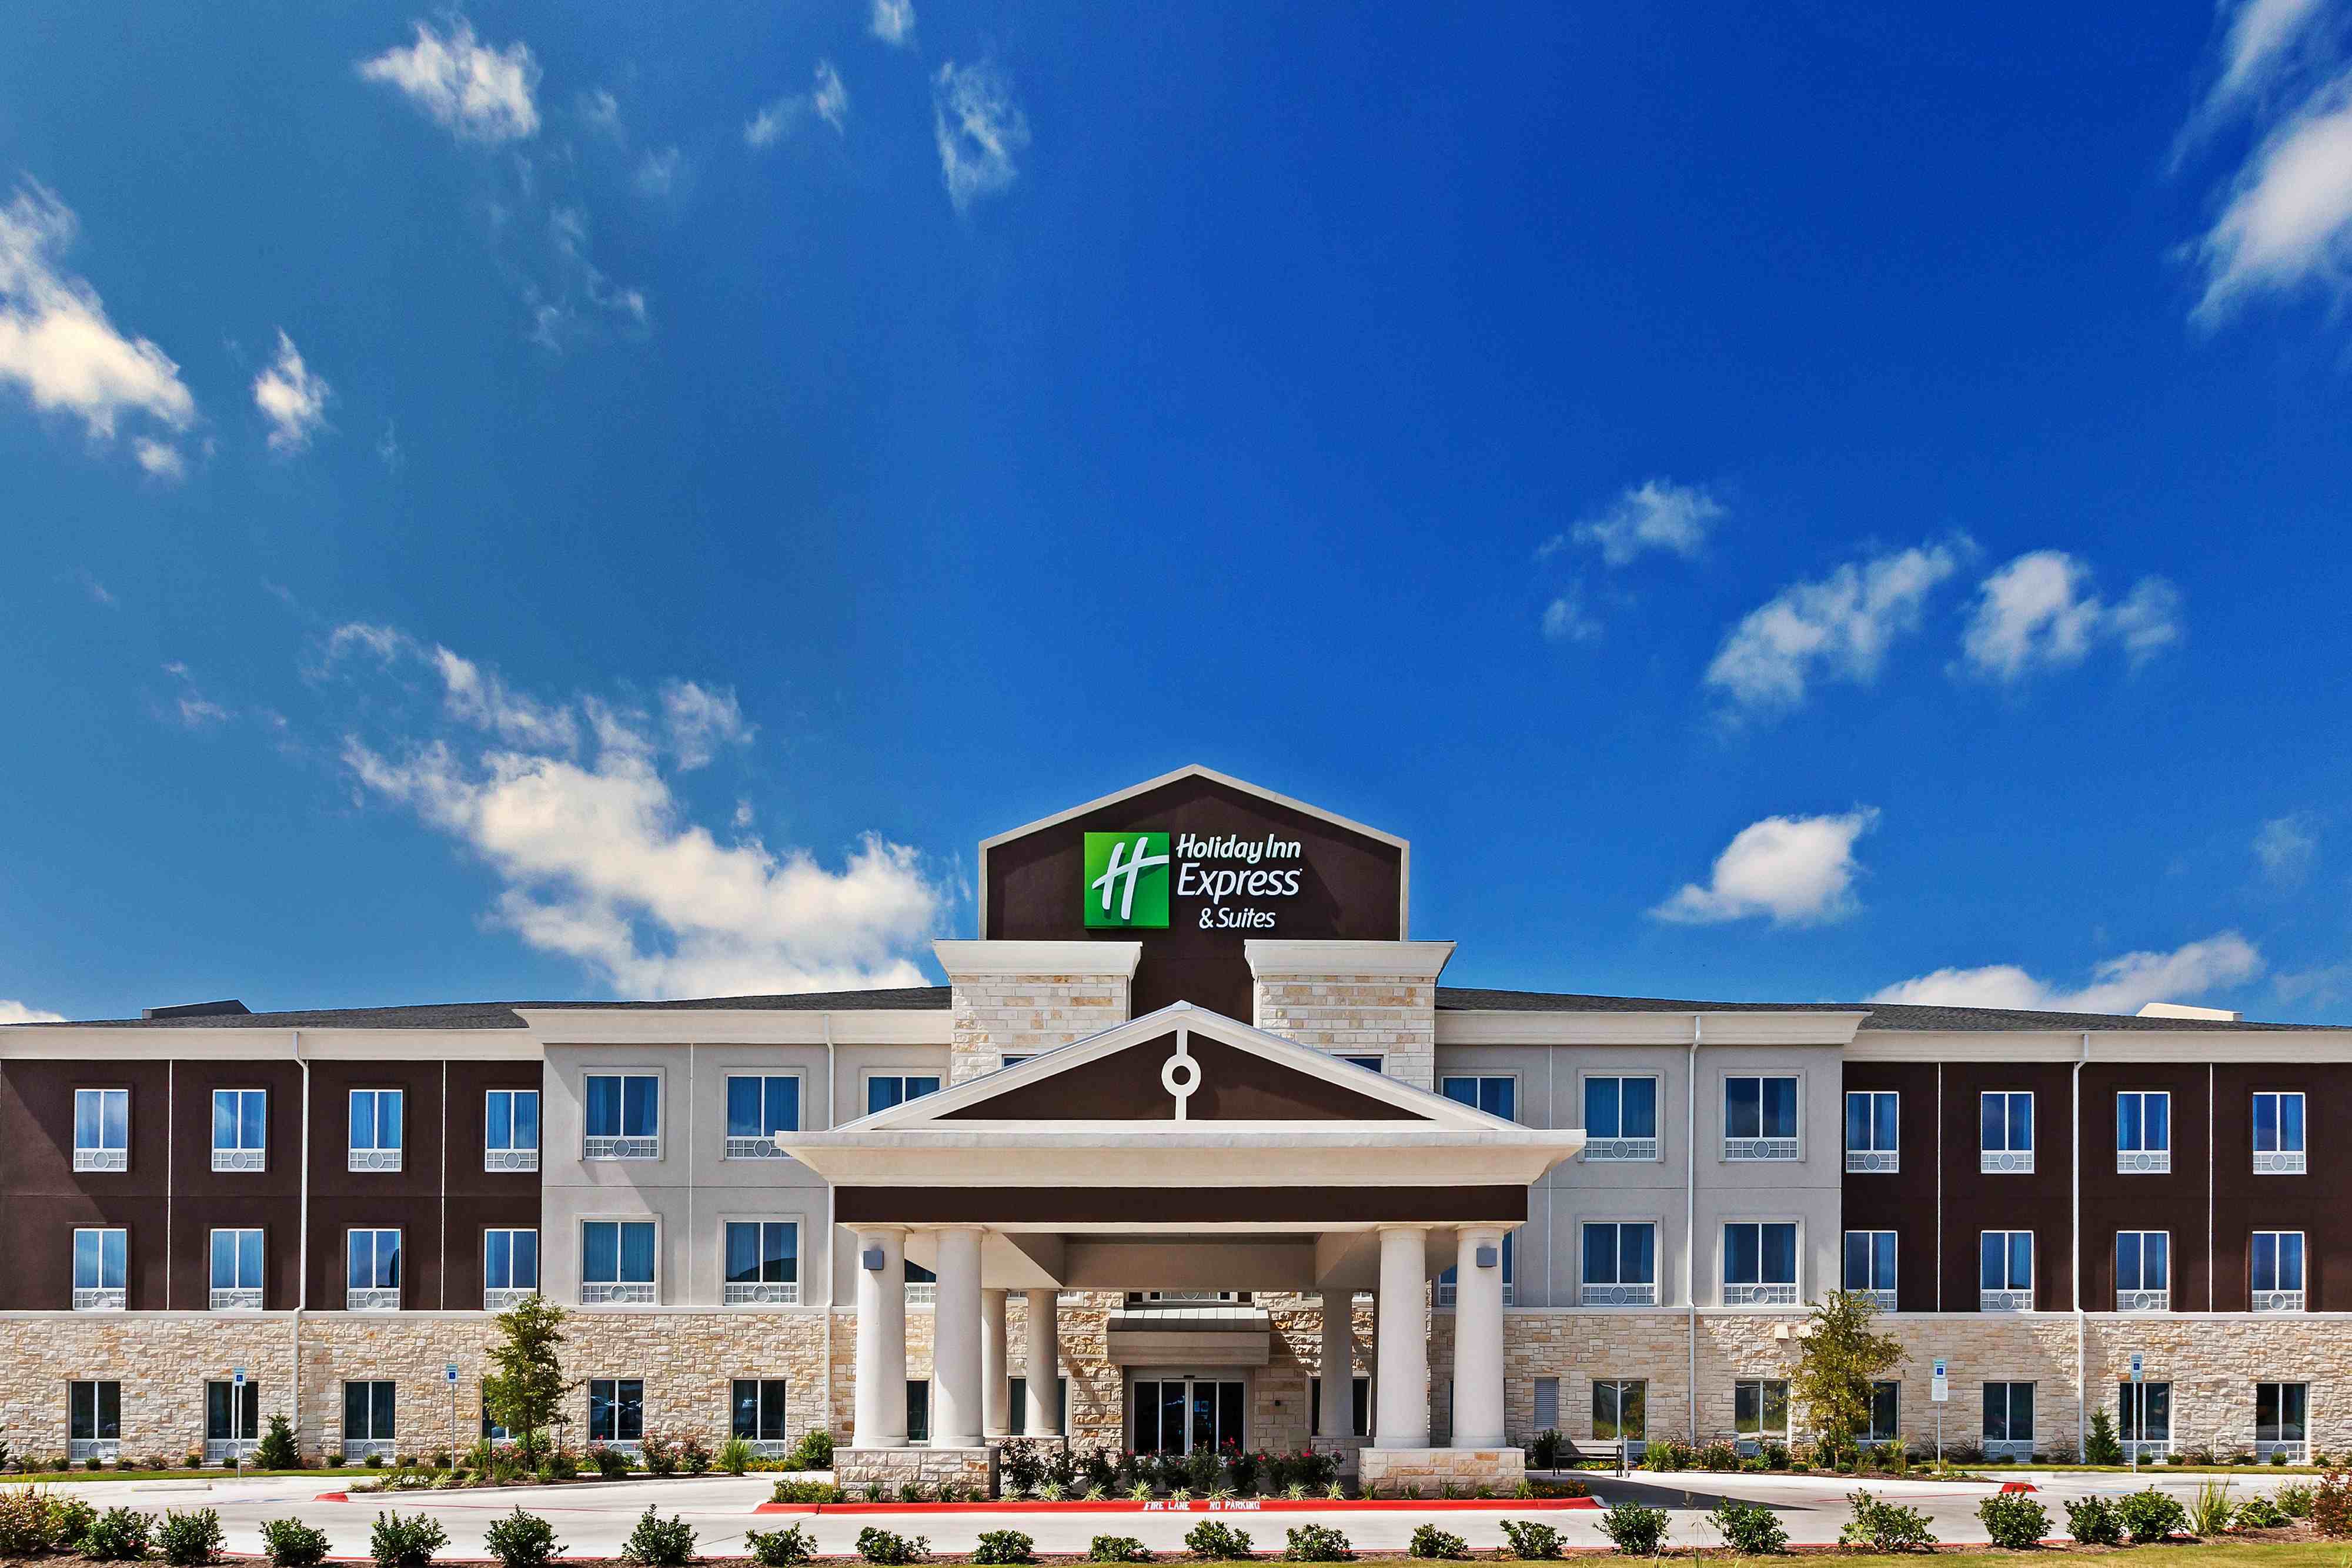 Photo of Holiday Inn Express & Suites Killeen, Killeen, TX